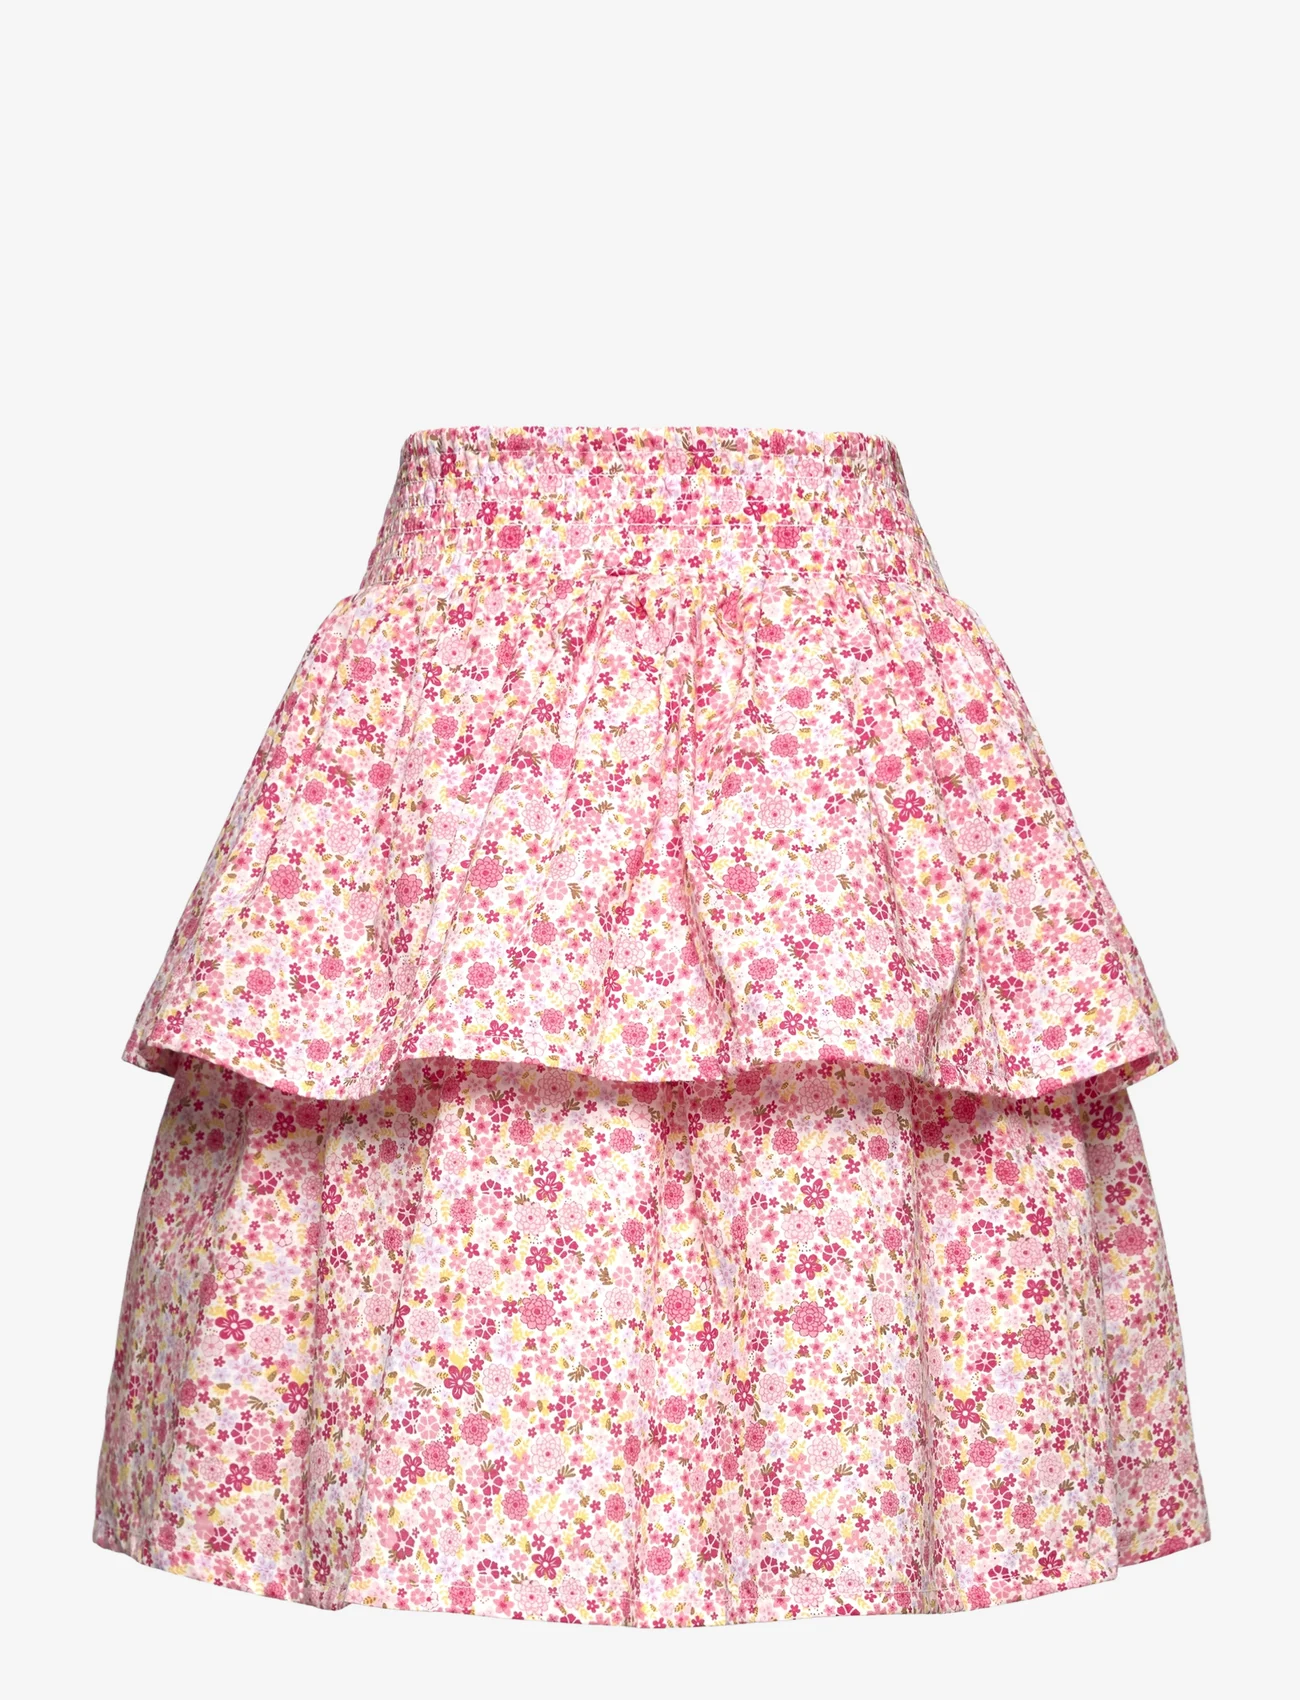 Minymo - Skirt AOP w. Lining - korta kjolar - pink dogwood - 1